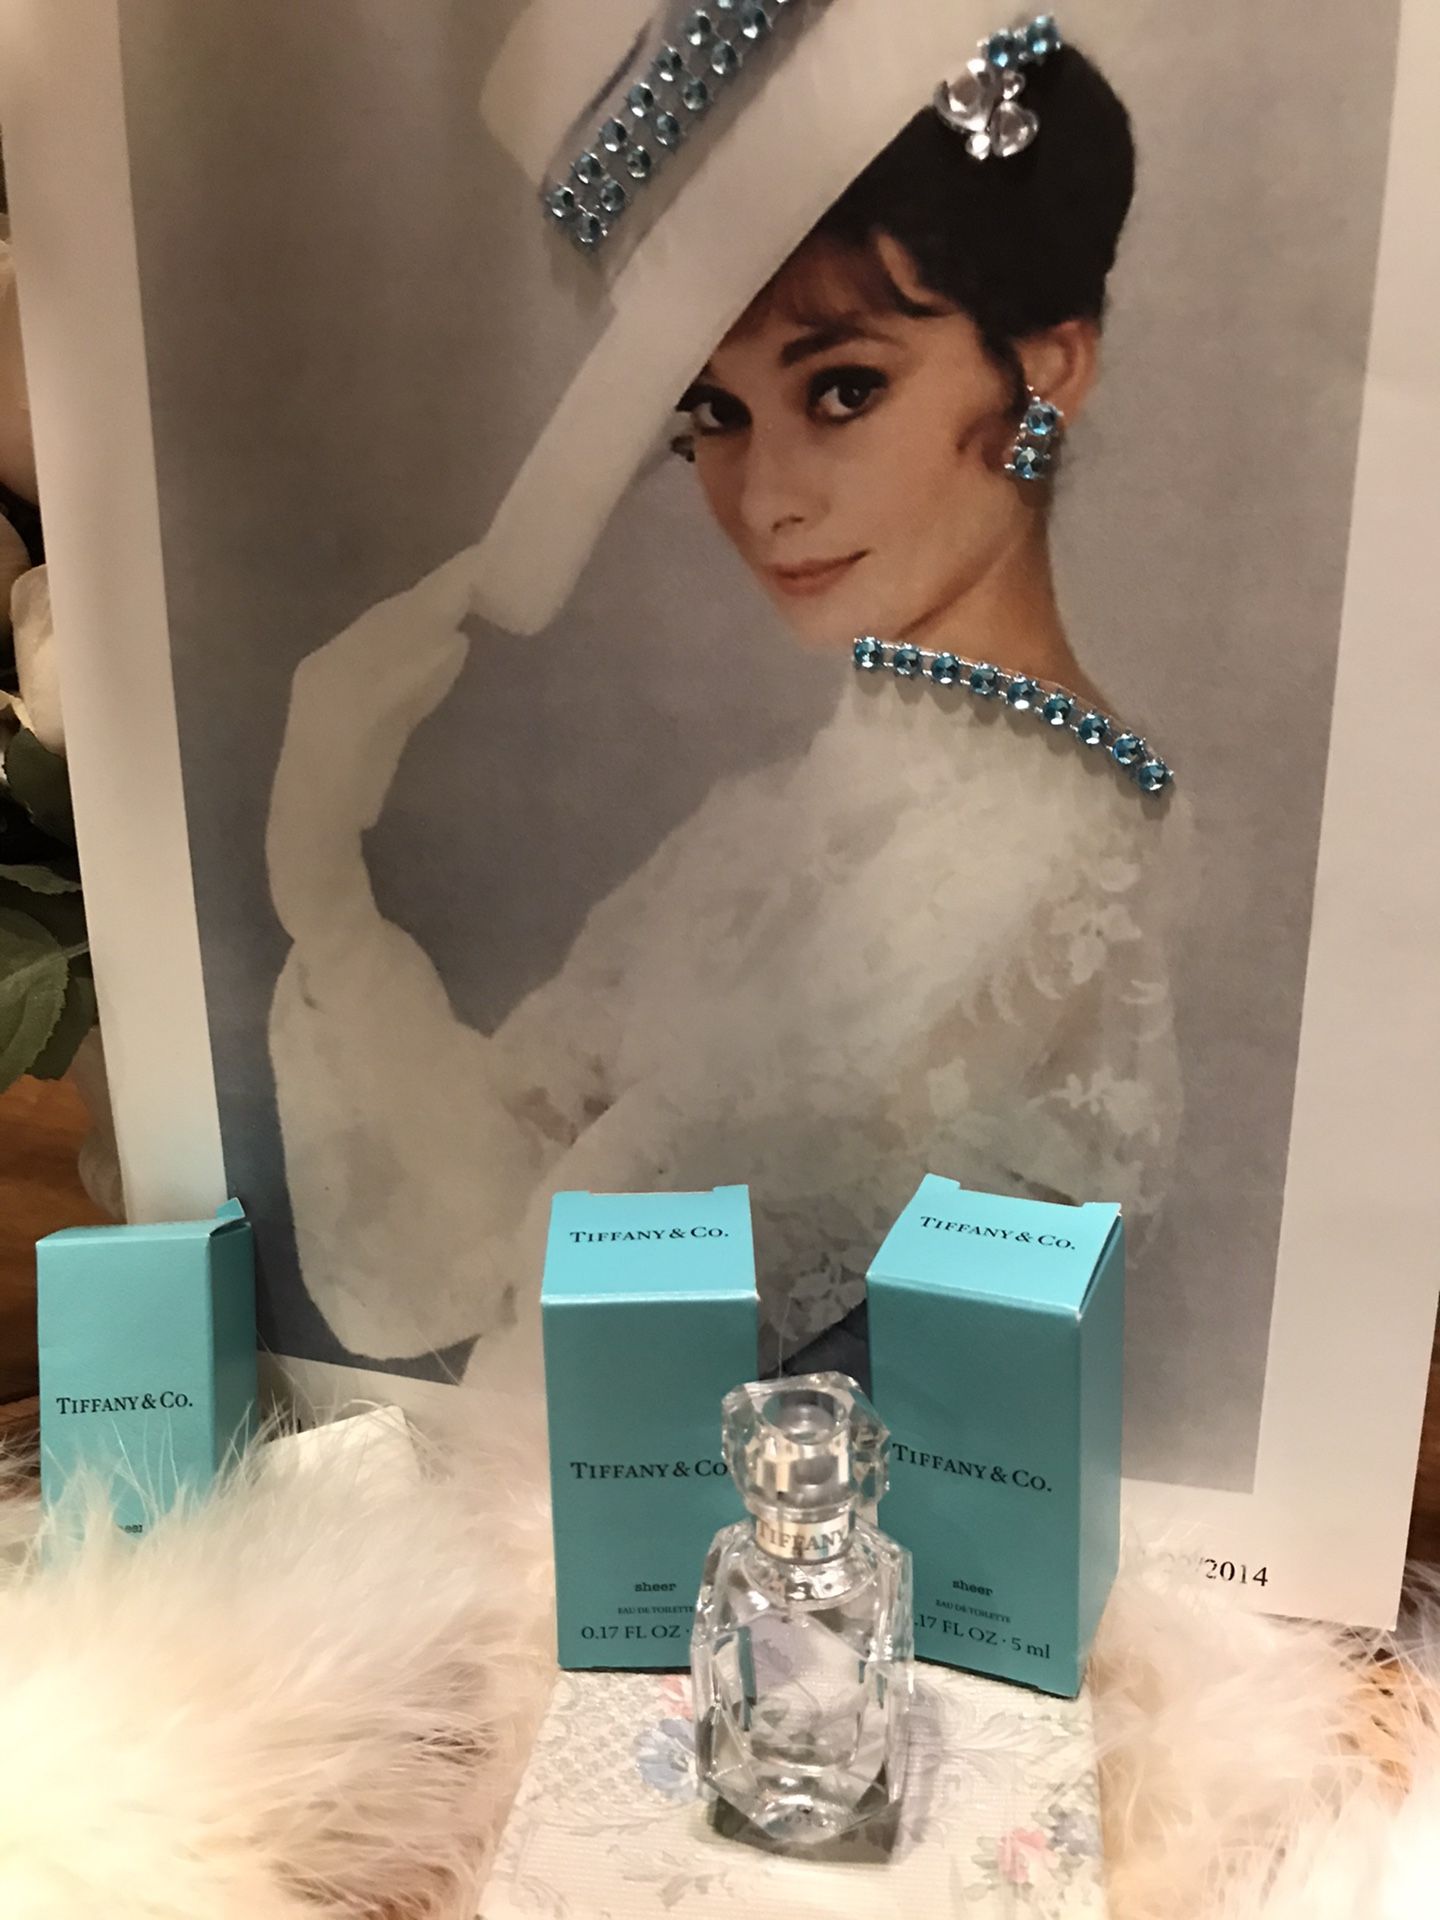 New : Tiffany & Co. Sheer 0.17 FL 0Z -5 ml